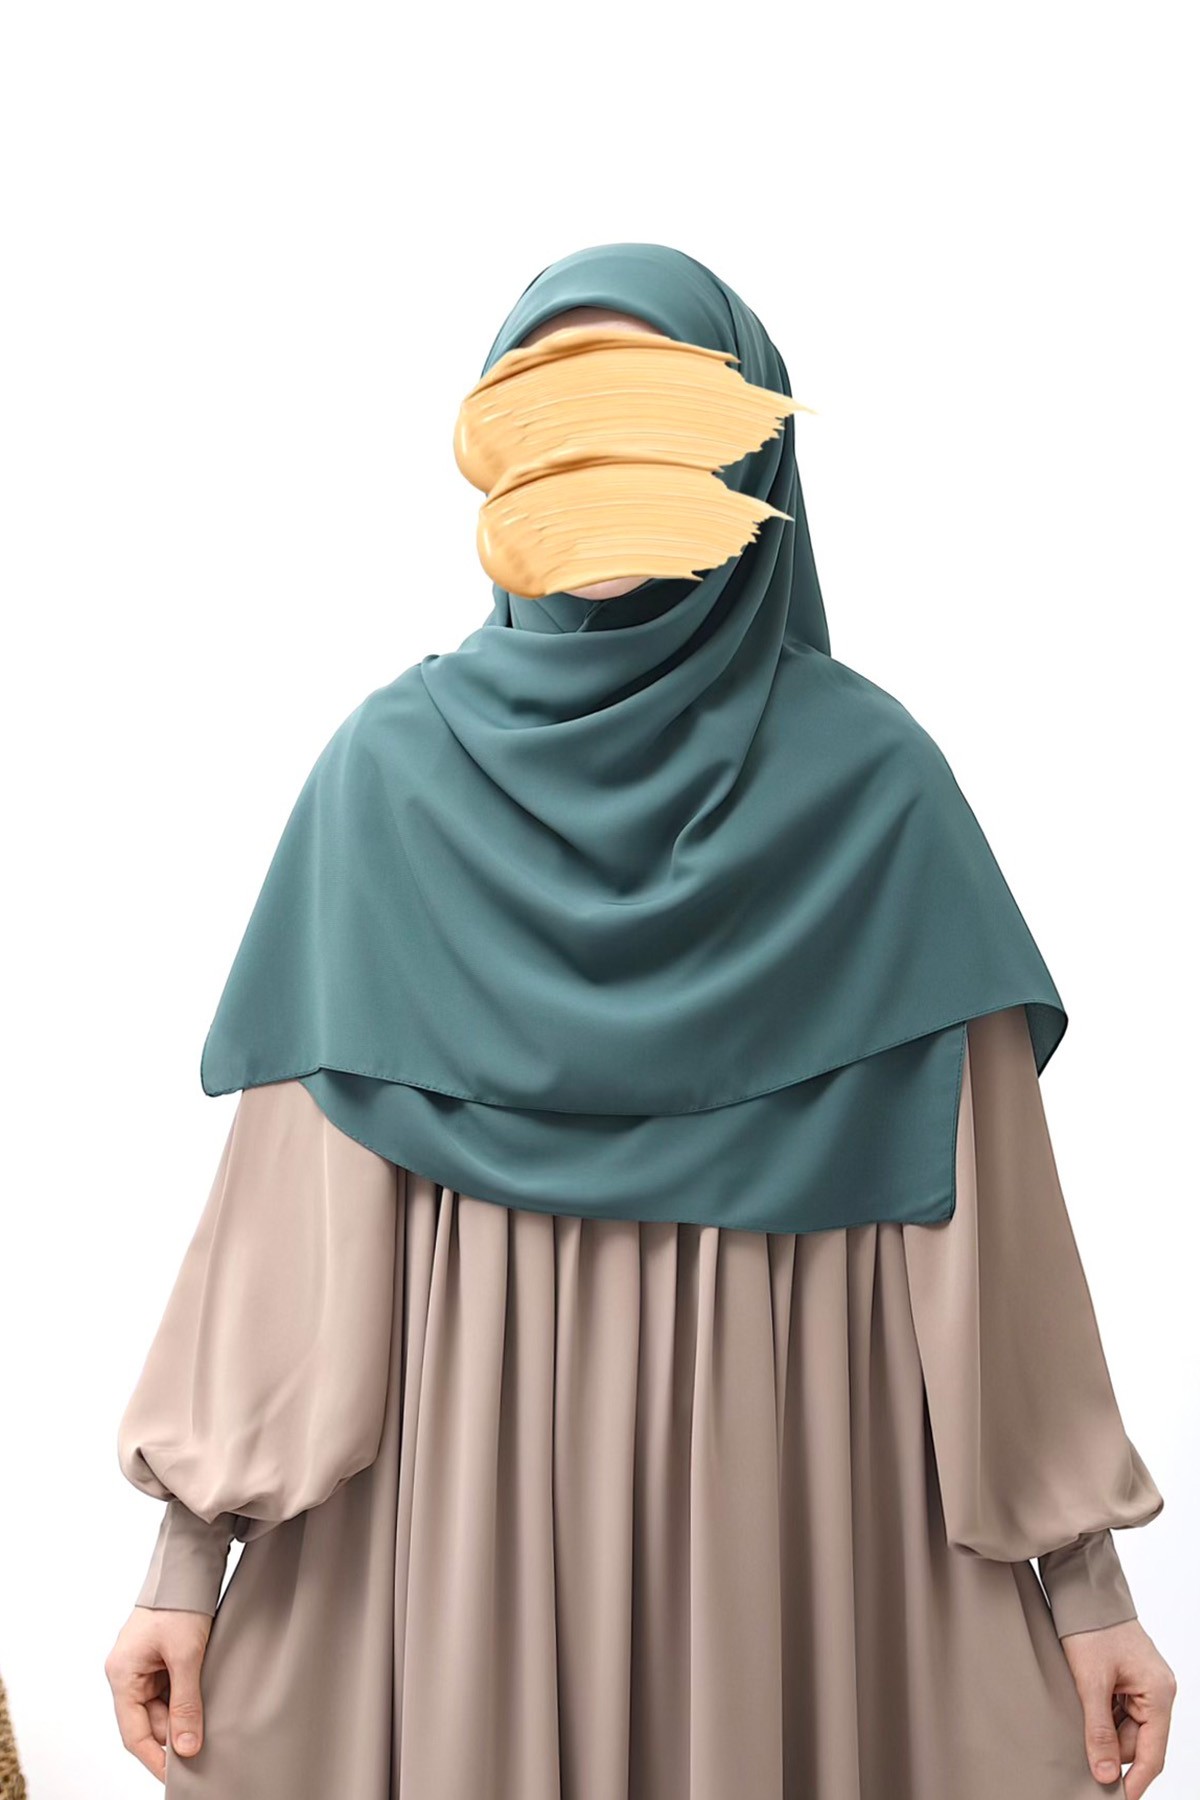 Square Hijab - Turquoise Green